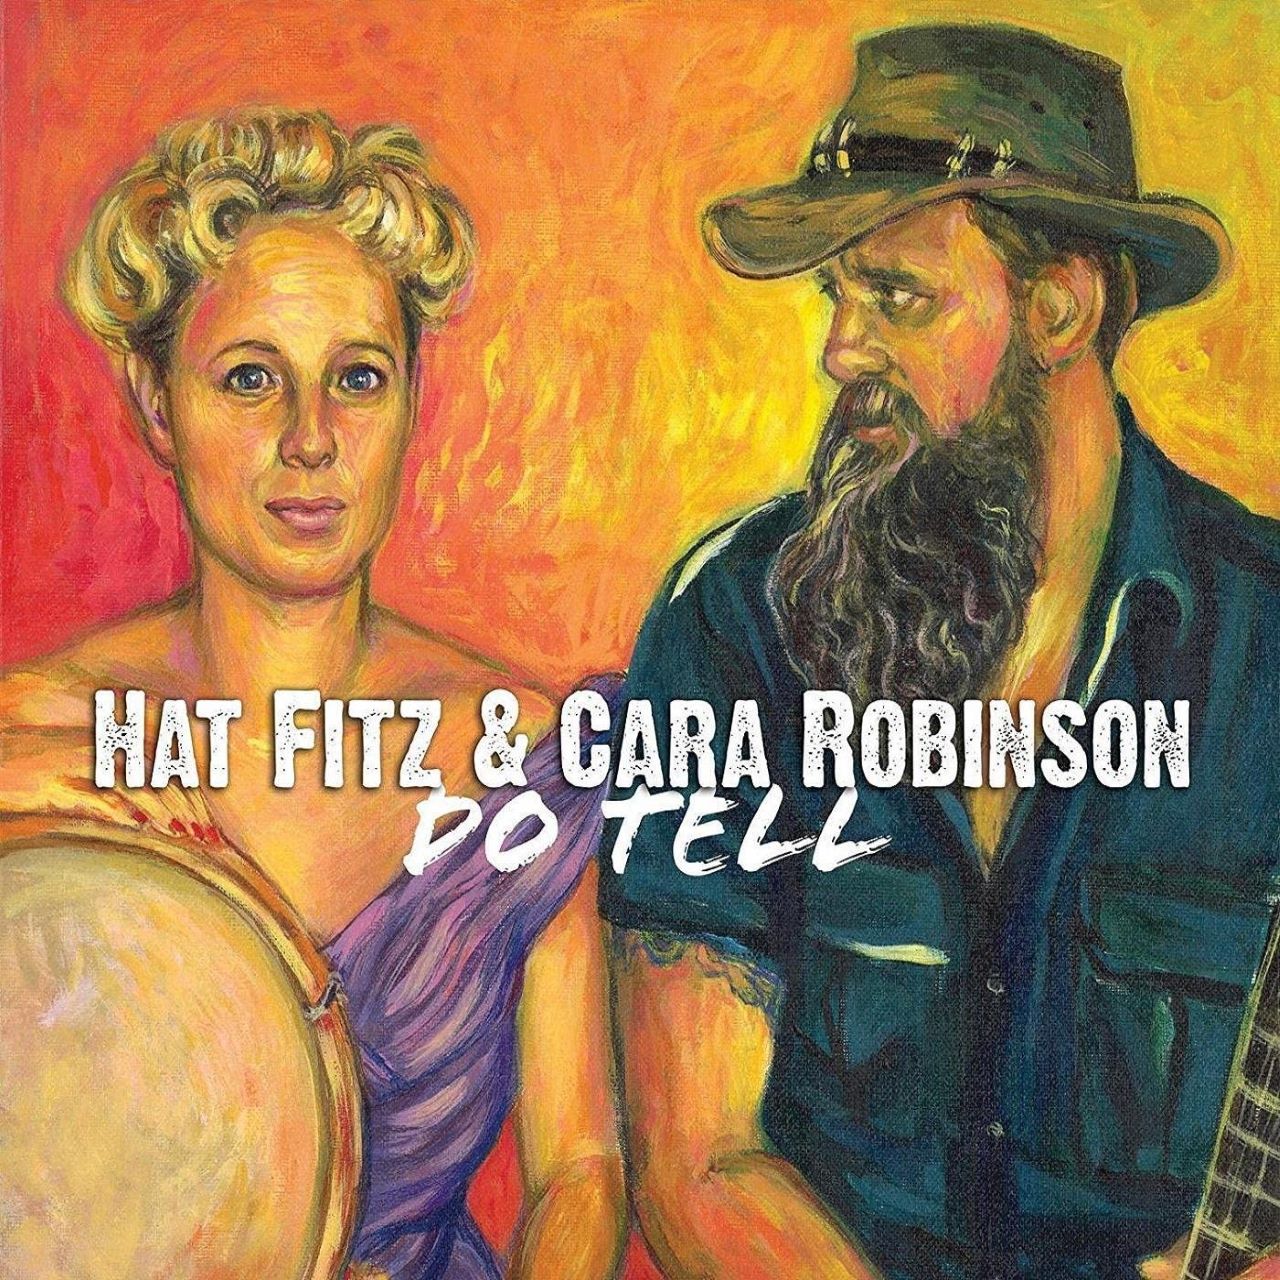 Hat Fitz & Cara Robinson - Do Tell covewr album